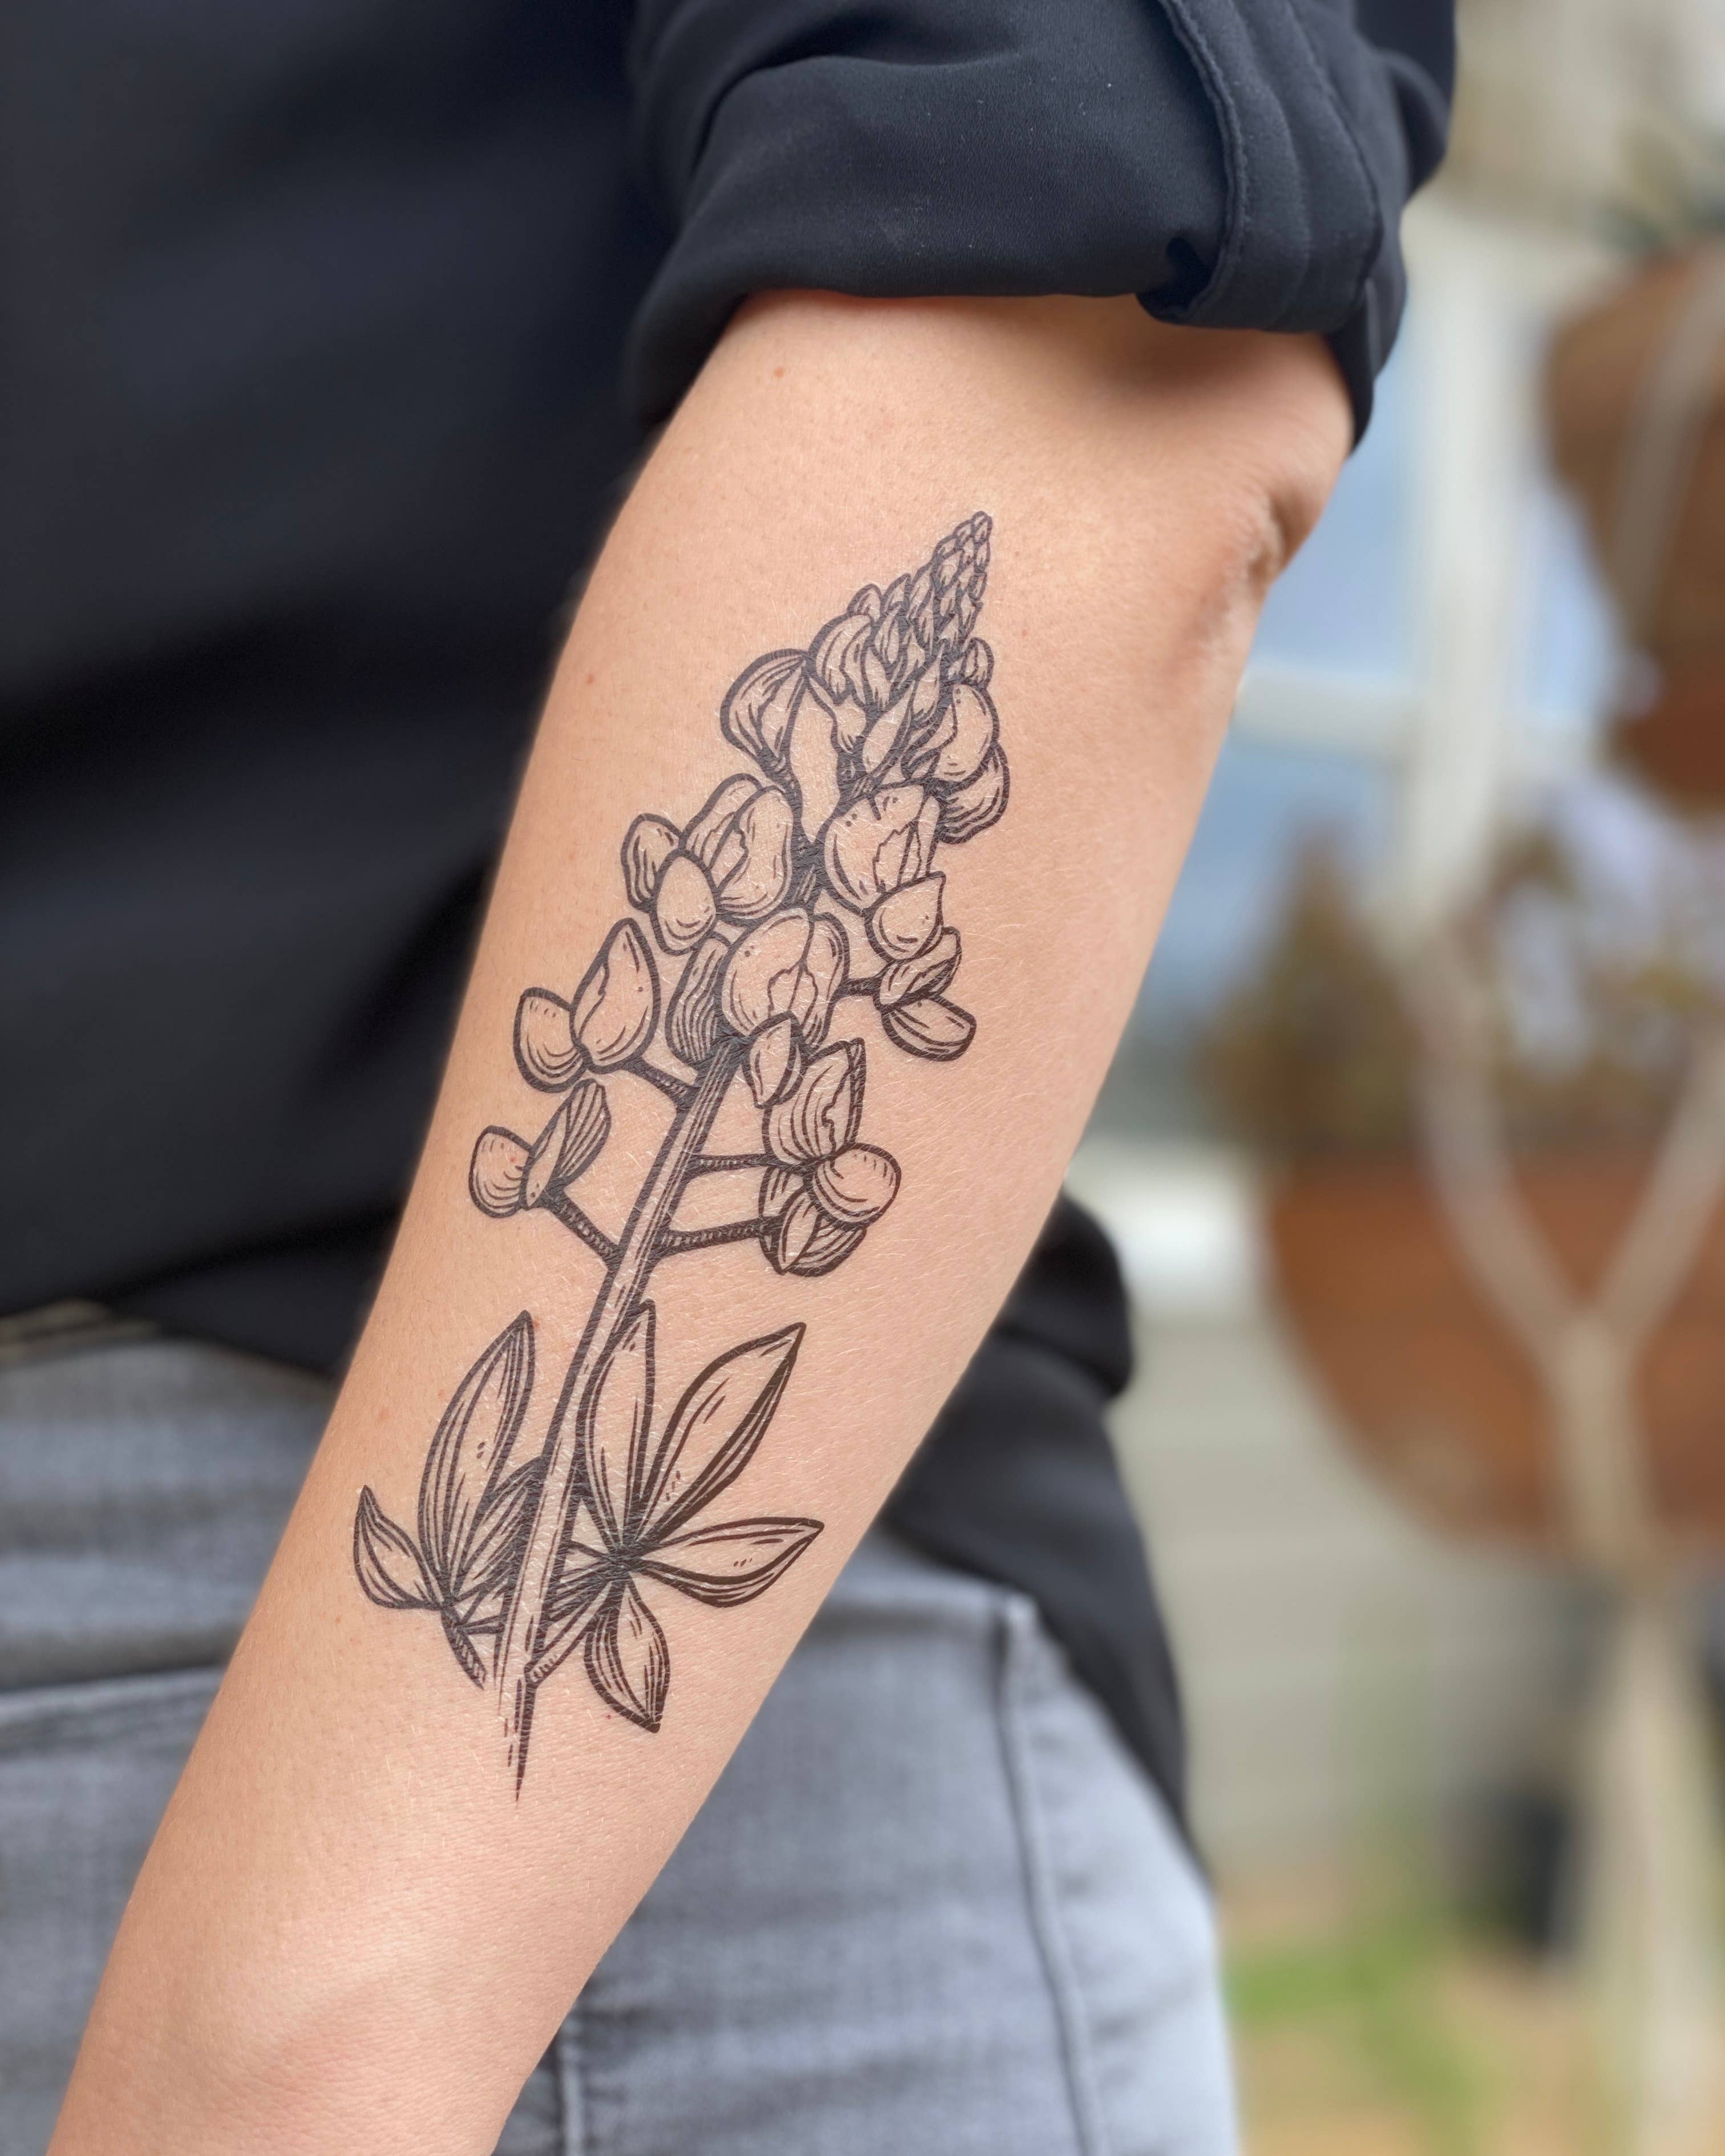  Sweet pea  Bluebonnet  Tattoo and Design by yoktr yokbbyg8  minimalbbyg8  Instagram